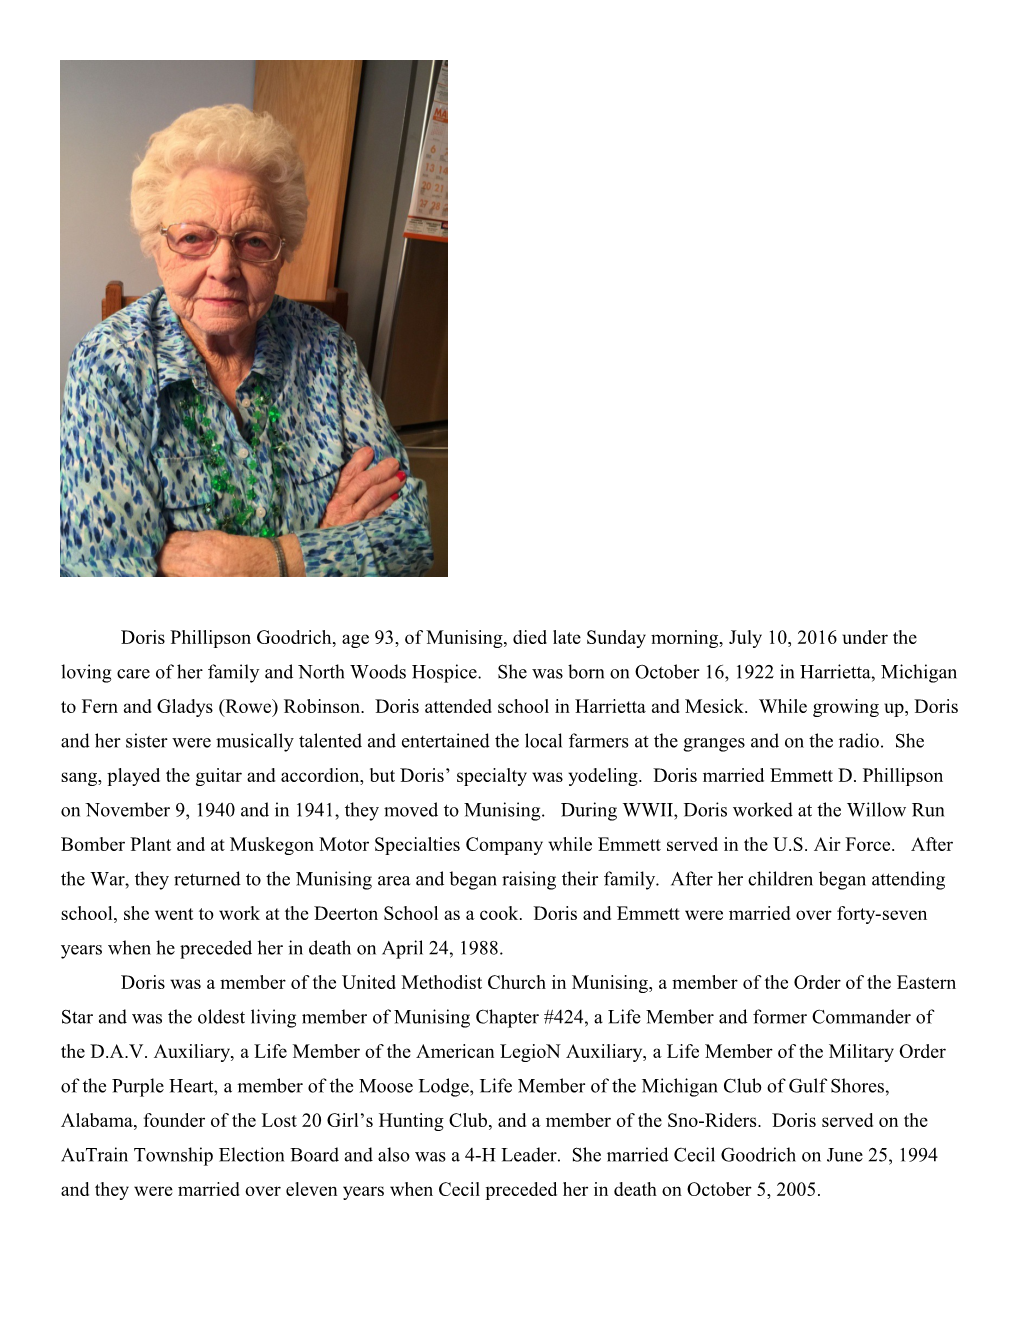 Doris Phillipson Goodrich, Age 93, of Munising, Died Late Sunday Morning, July 10, 2016